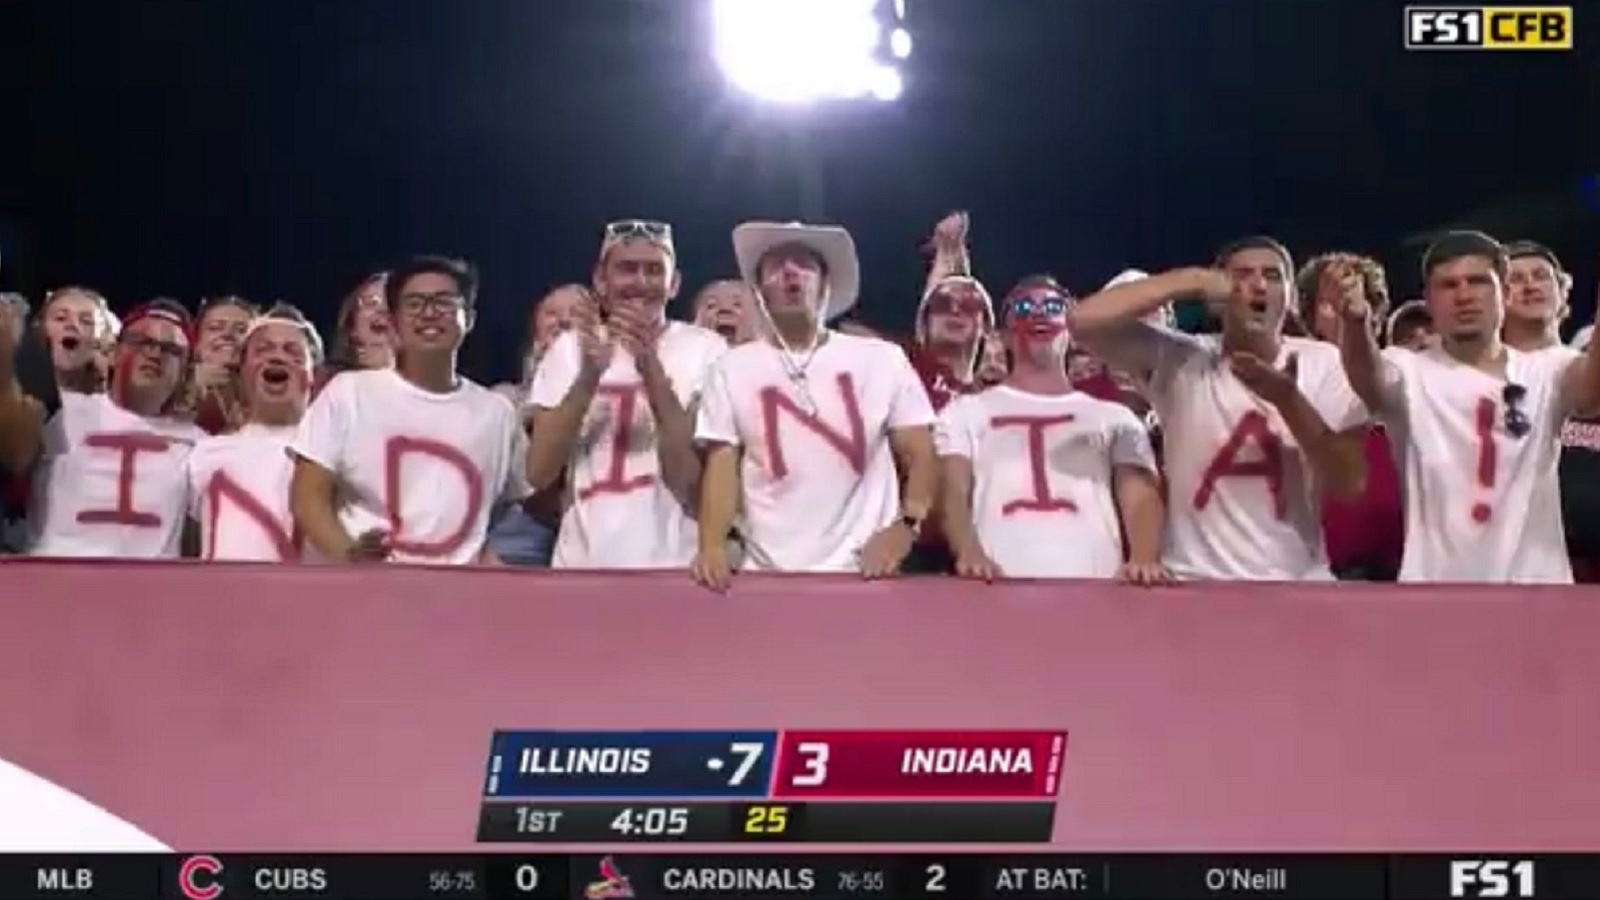 Indiana football jersey features embarrassing spelling error